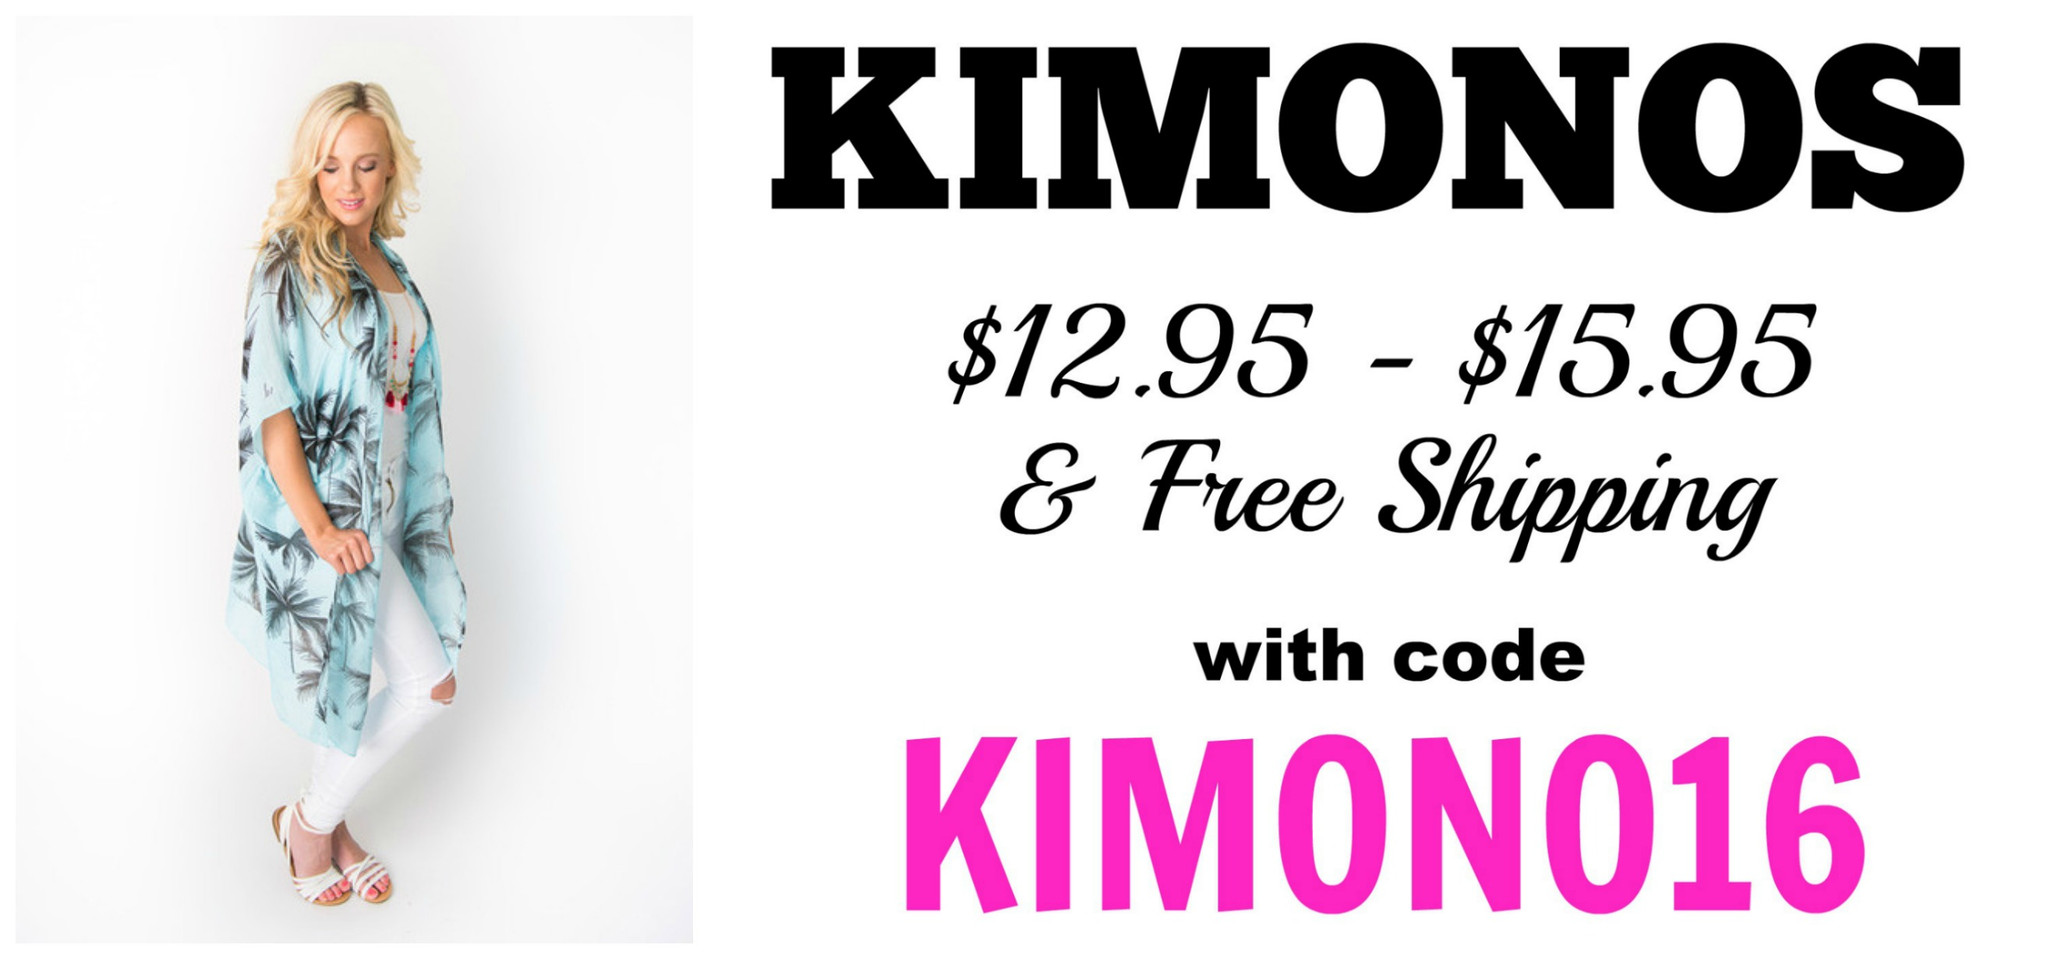 Comfy Kimonos From $12.95 Shipped!